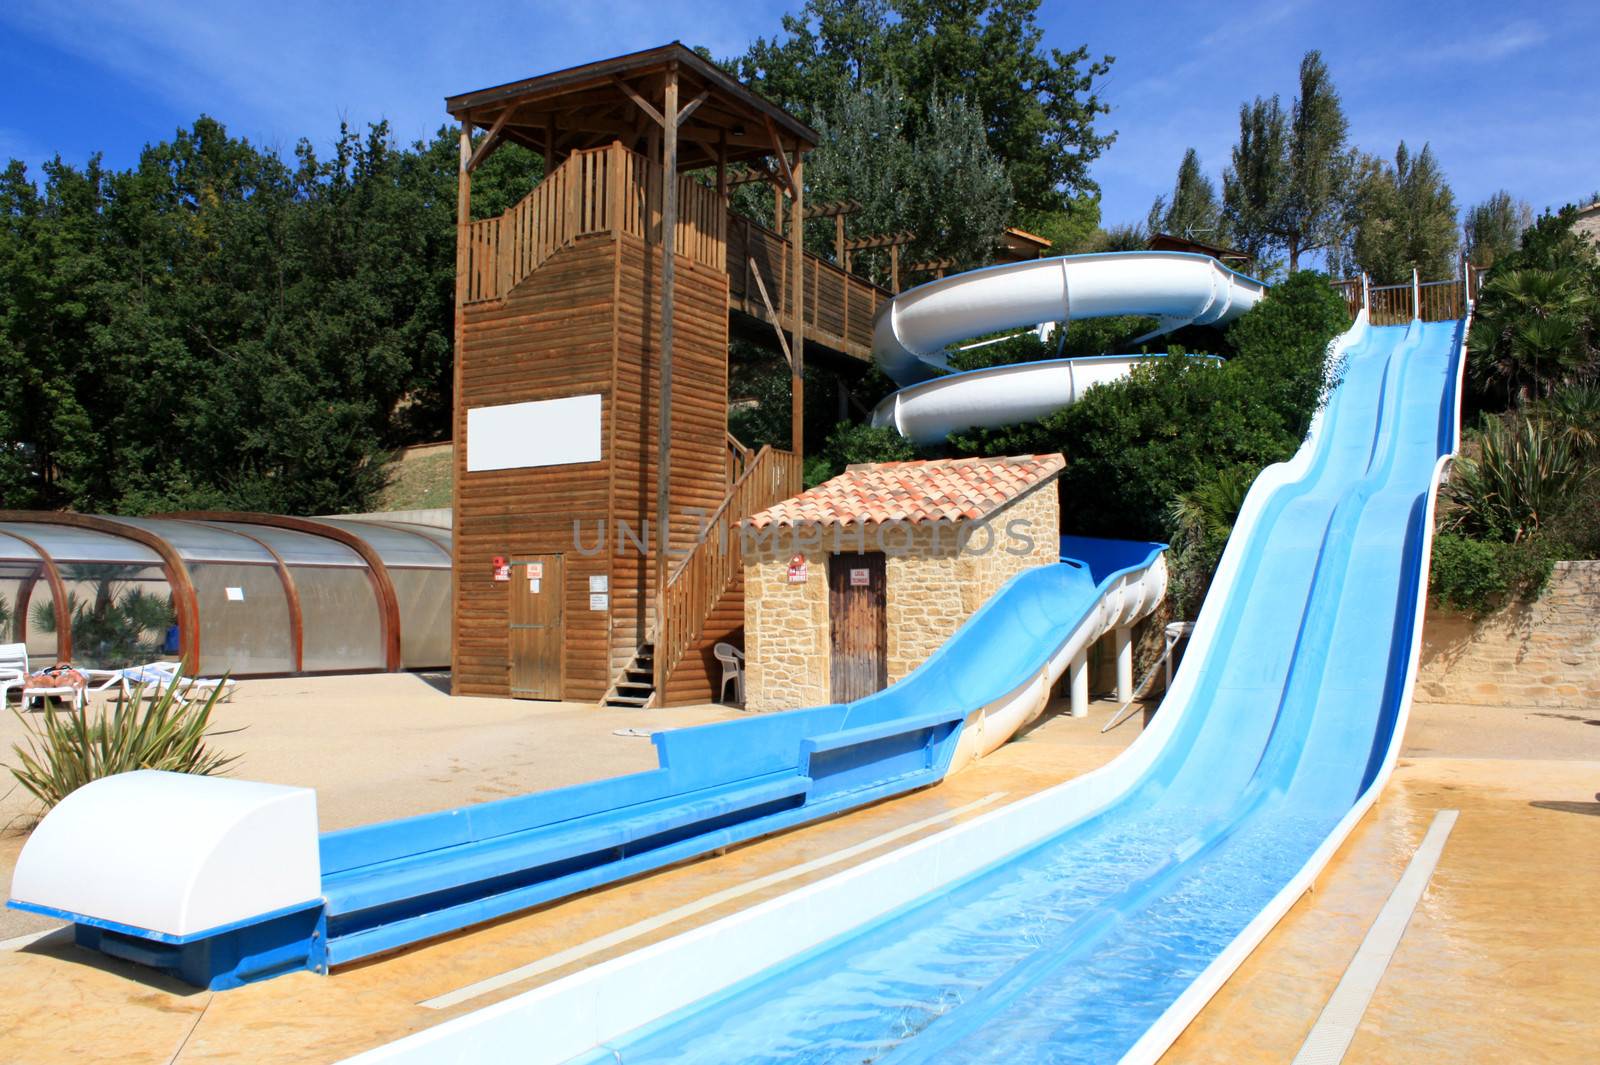 Slide and Swimming pool